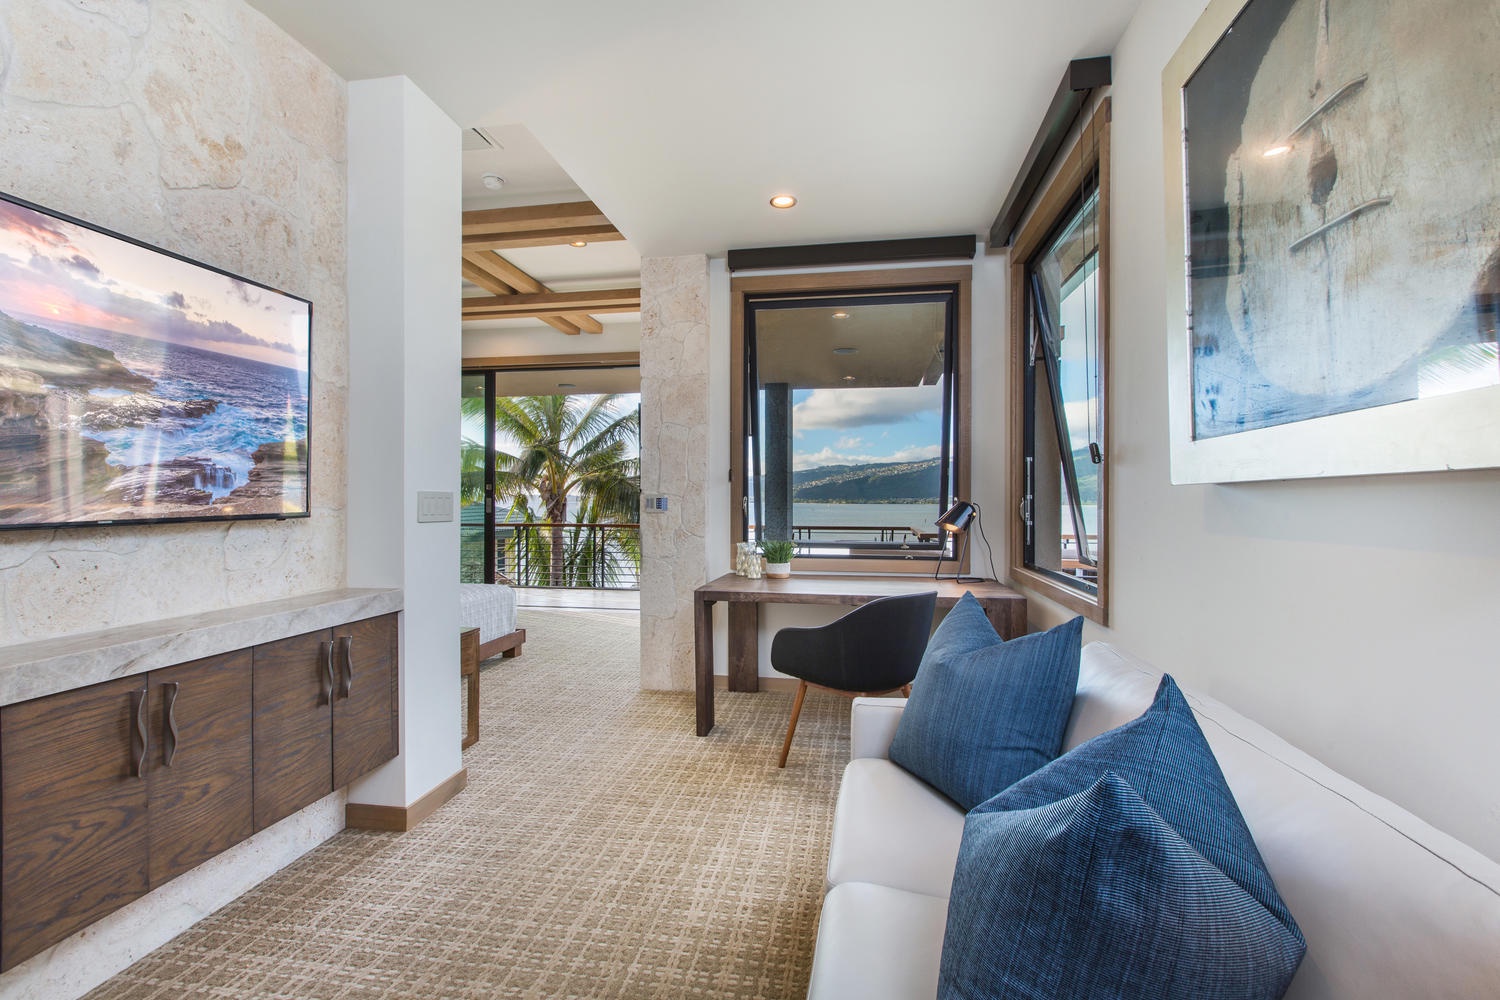 Honolulu Vacation Rentals, Ocean House 4 Bedroom - Second primary bedroom lounge